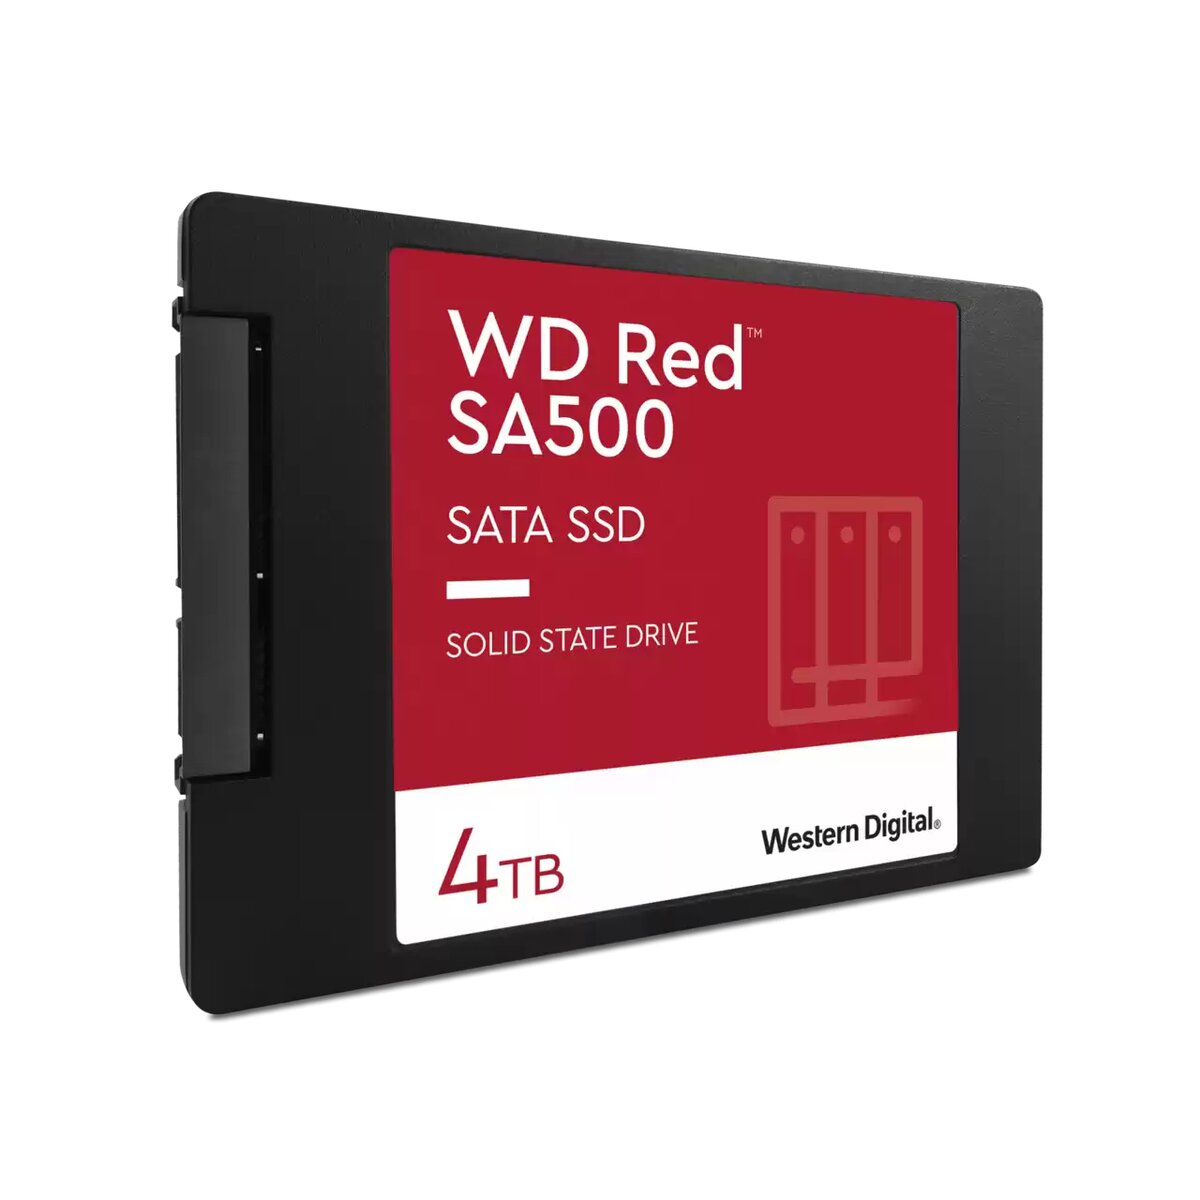 UNIDAD SSD WD RED SA500 SATA lll 4TB 2.5